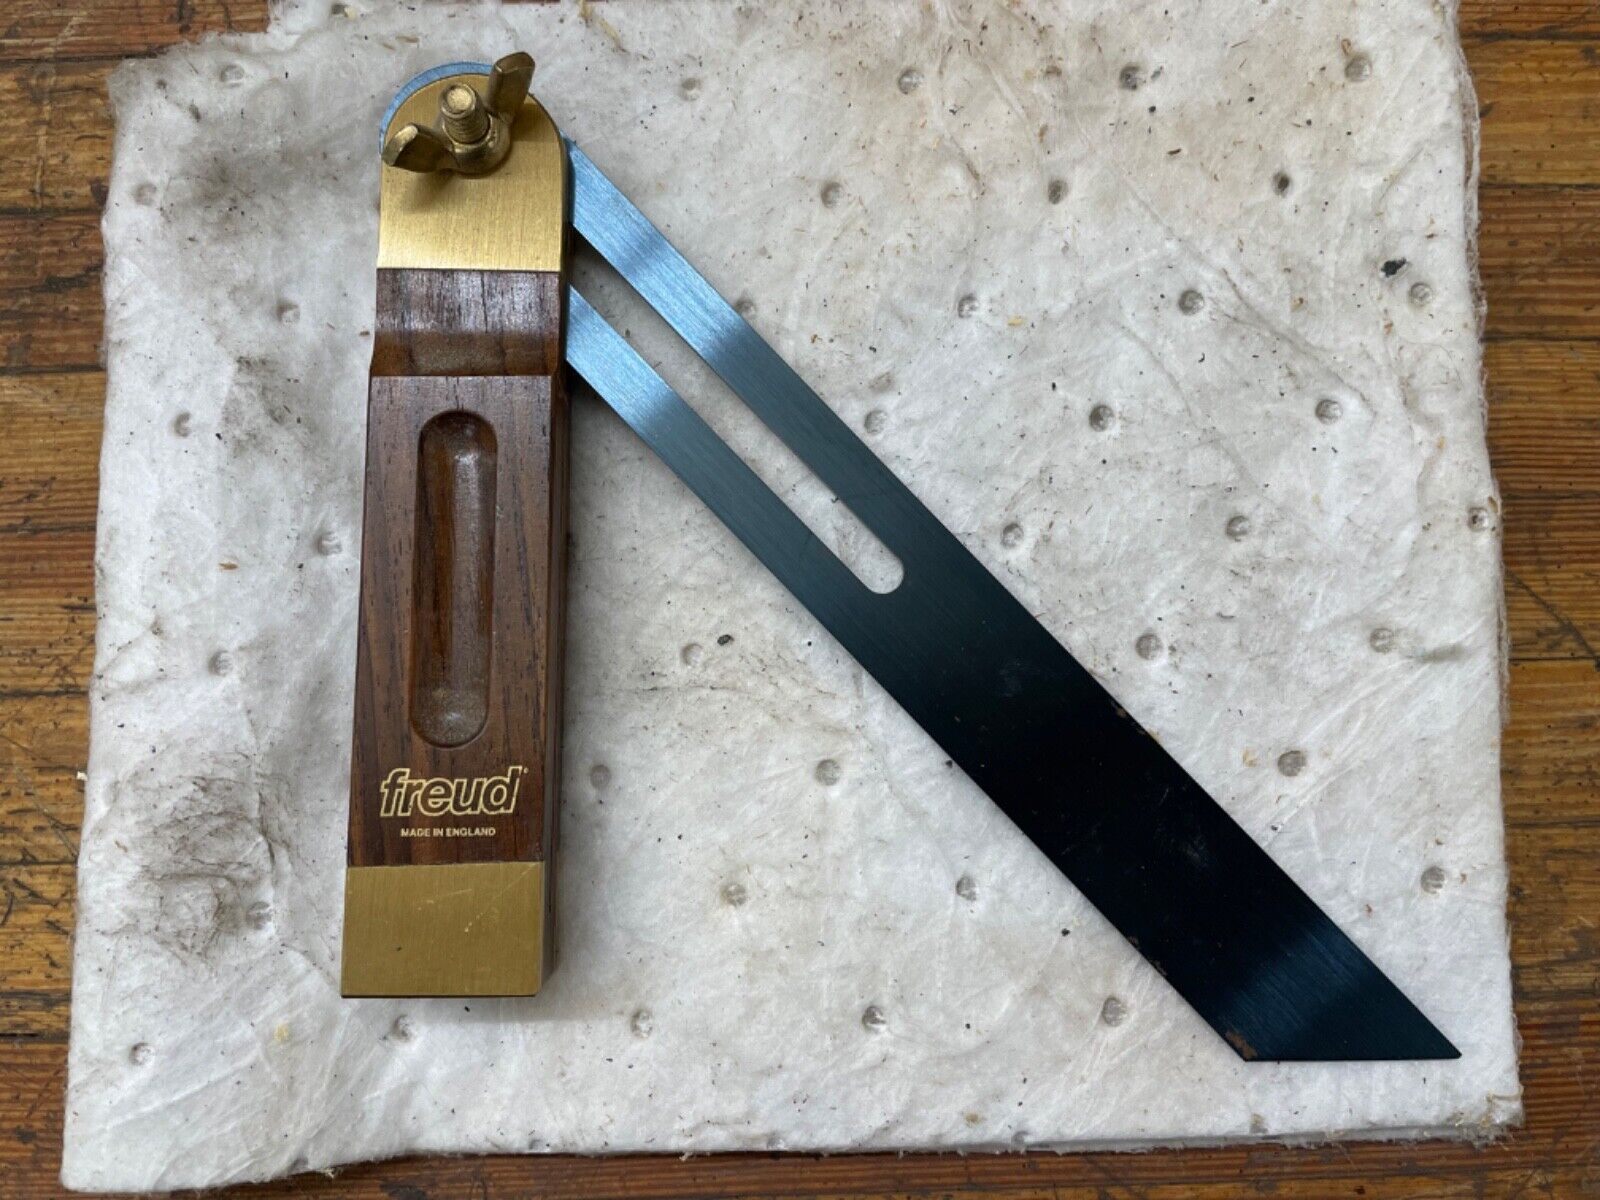 Vintage Freud angle gauge with Rosewood handle